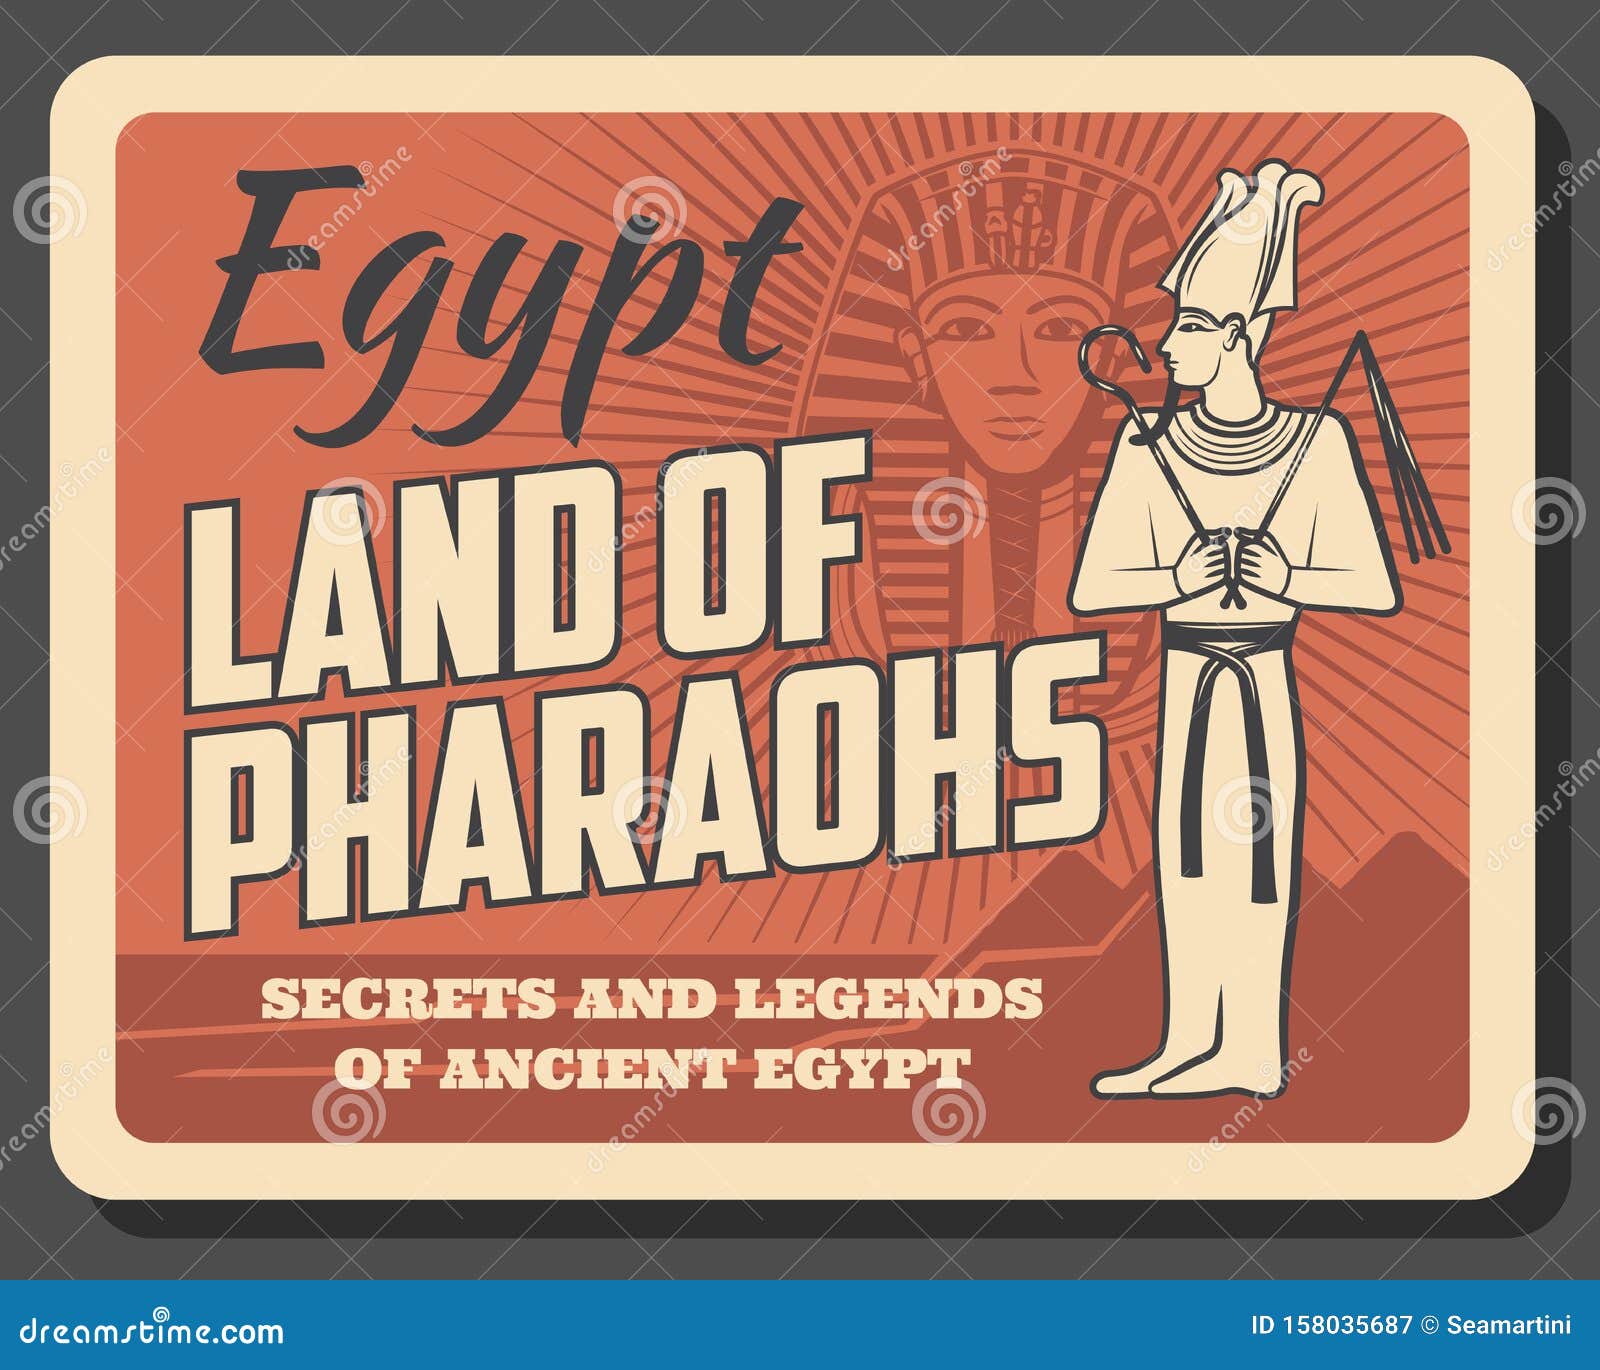 Download pharaonen vollversion land der kostenlos Treasures of